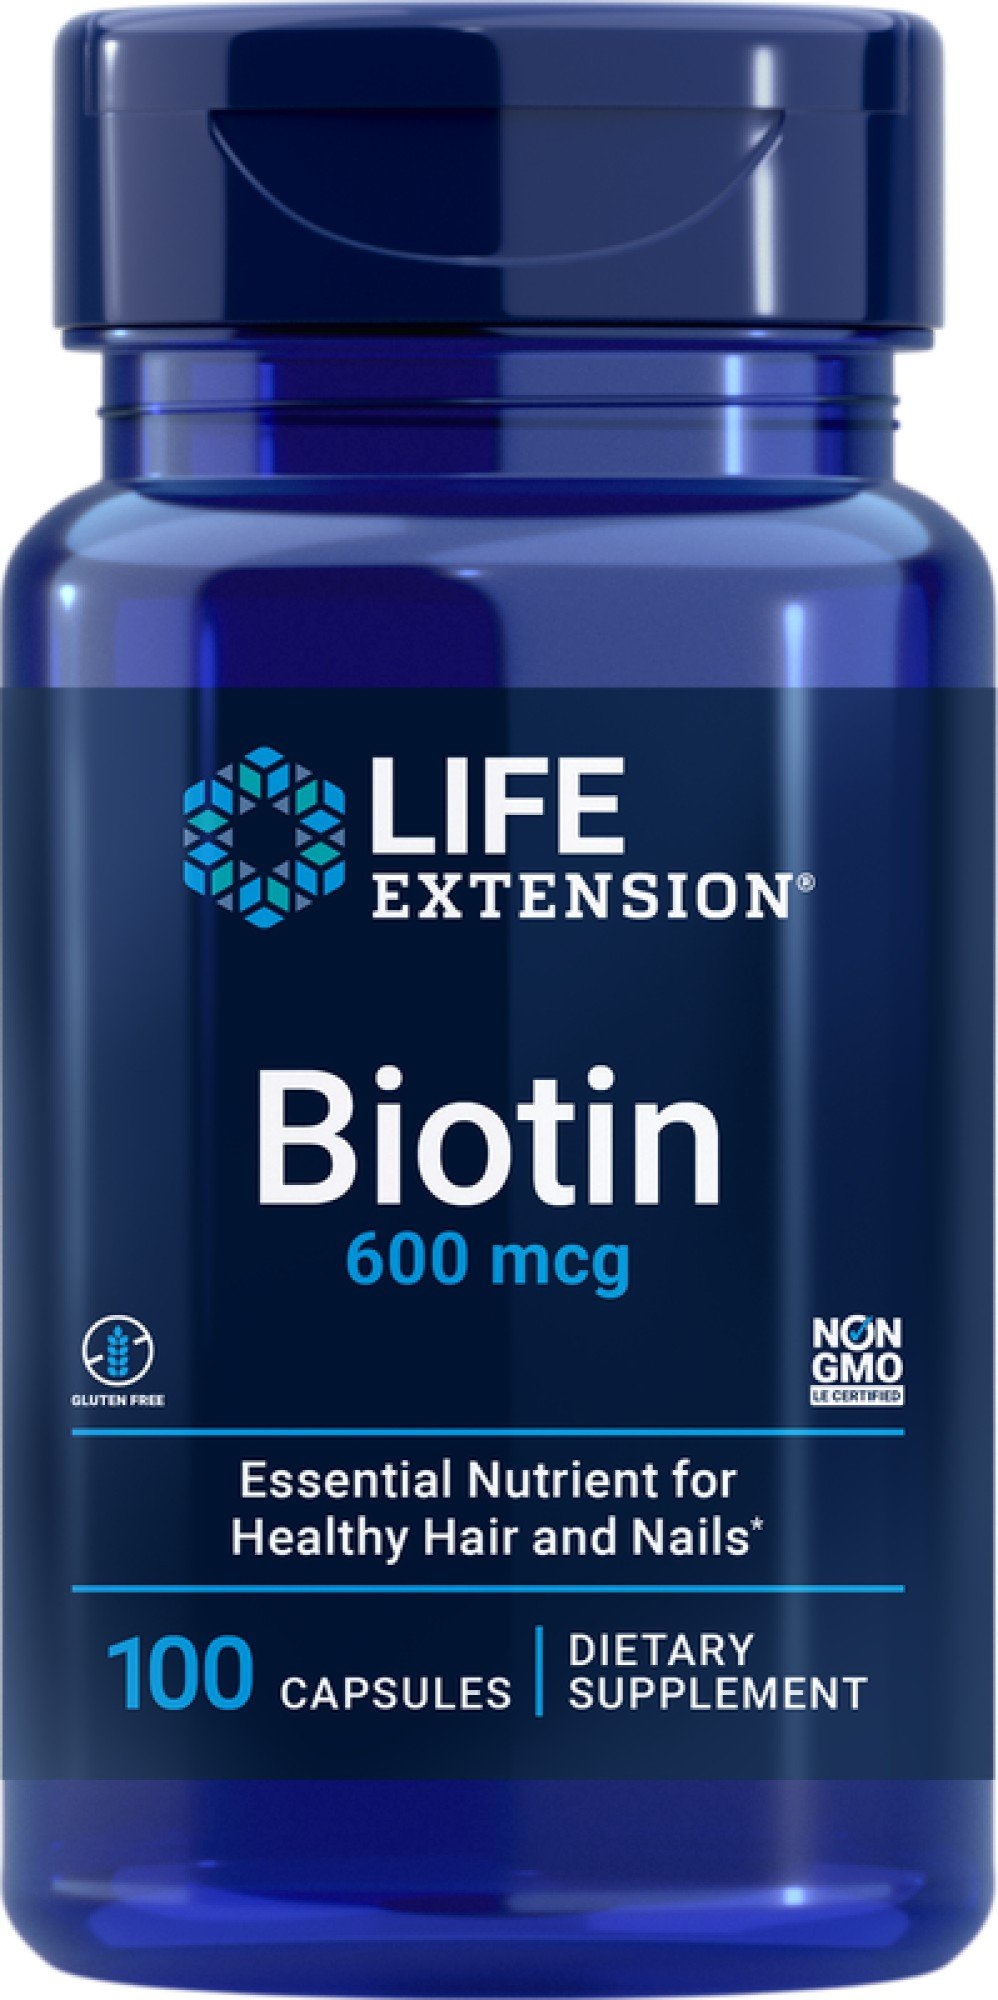 Life Extension Biotin 600 mcg 100 Capsule